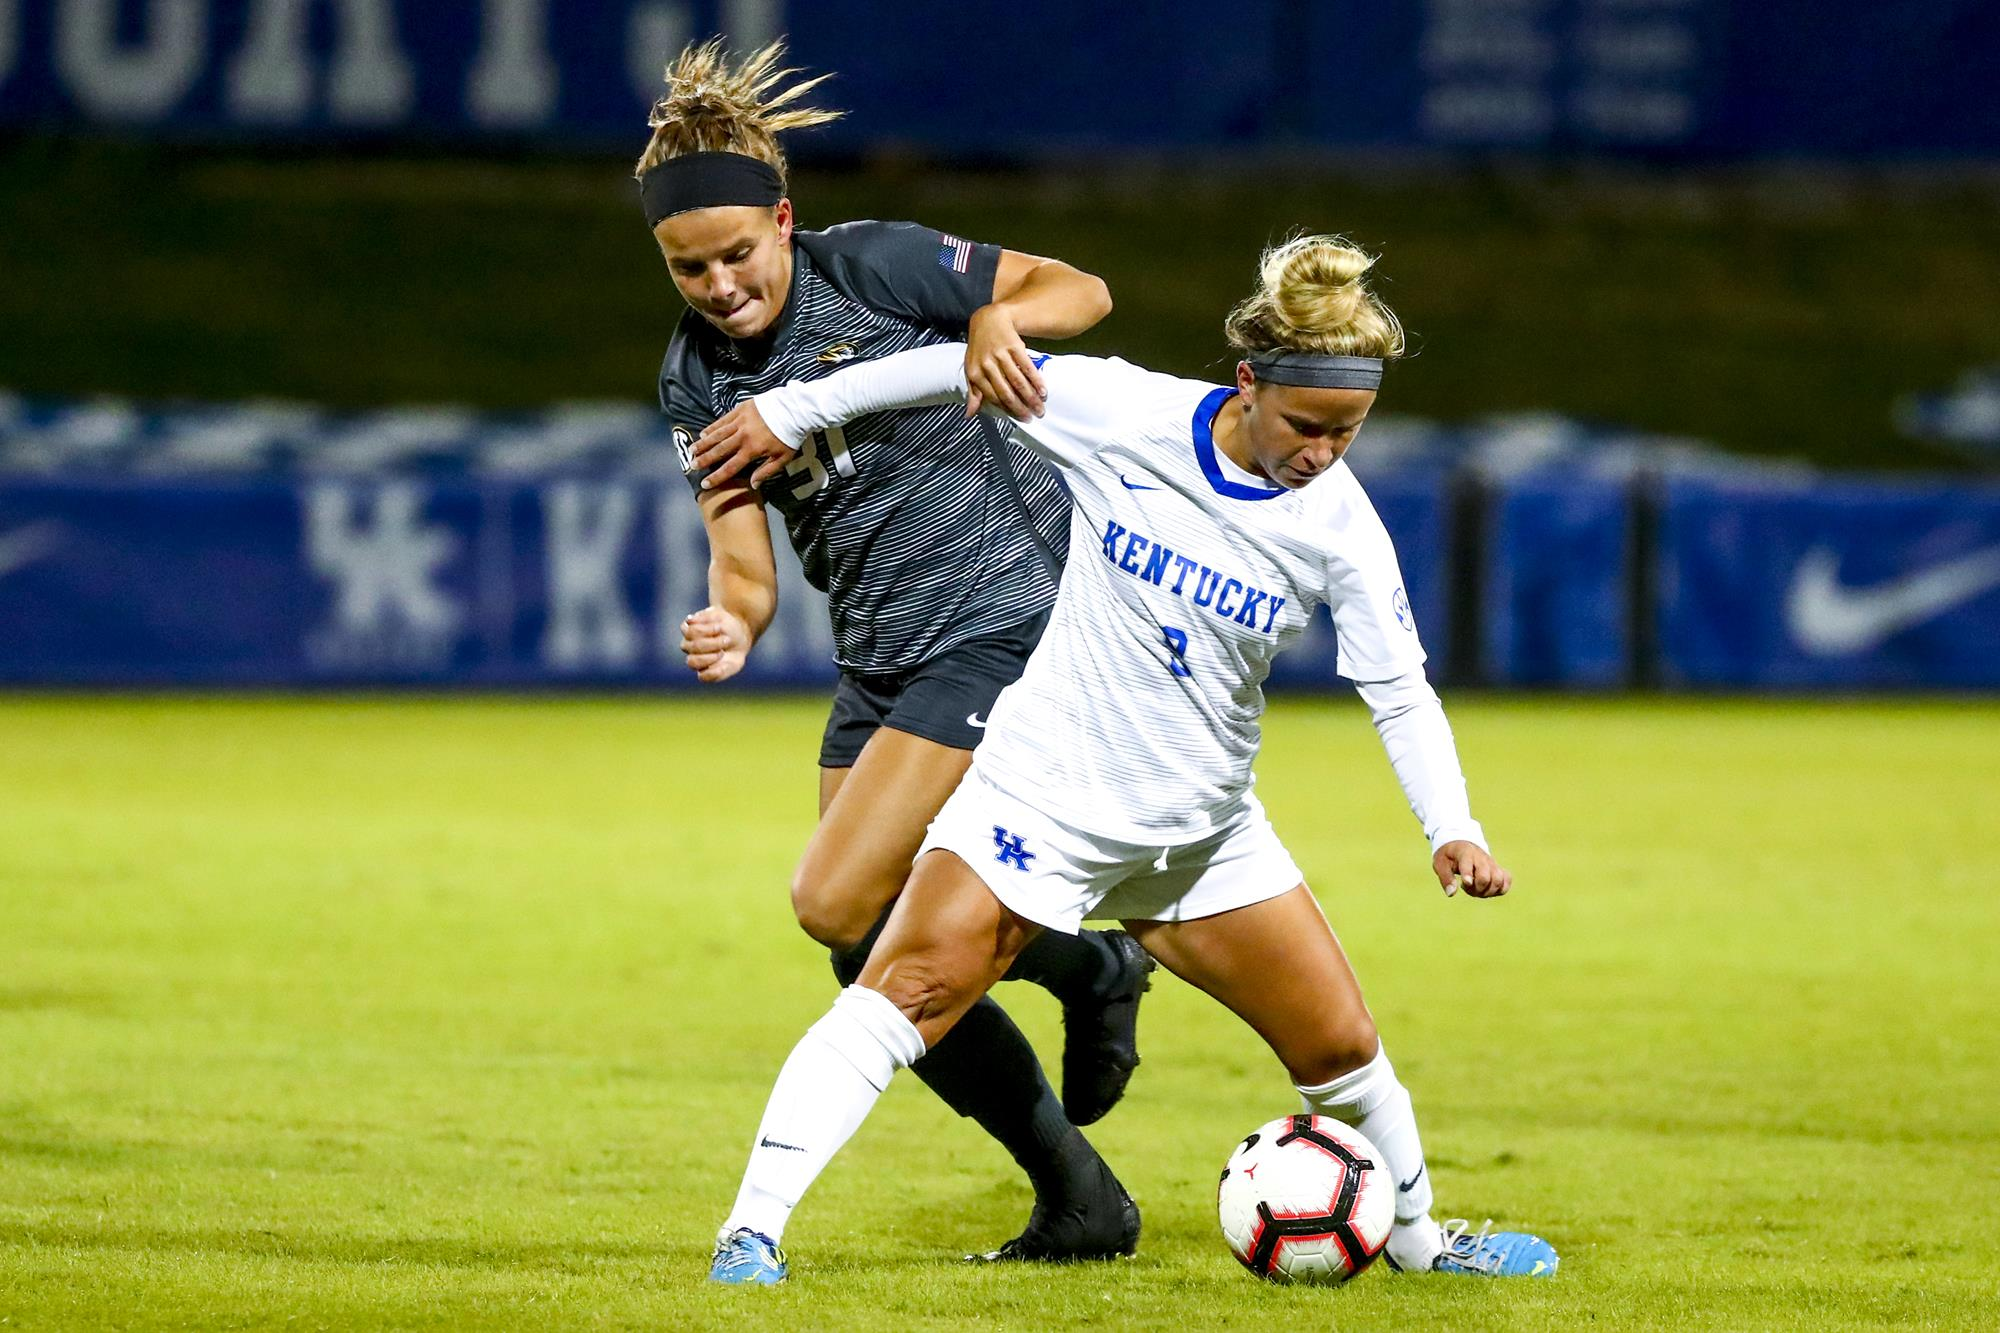 Kentucky Women’s Soccer Defeats Missouri at Home on Friday Night